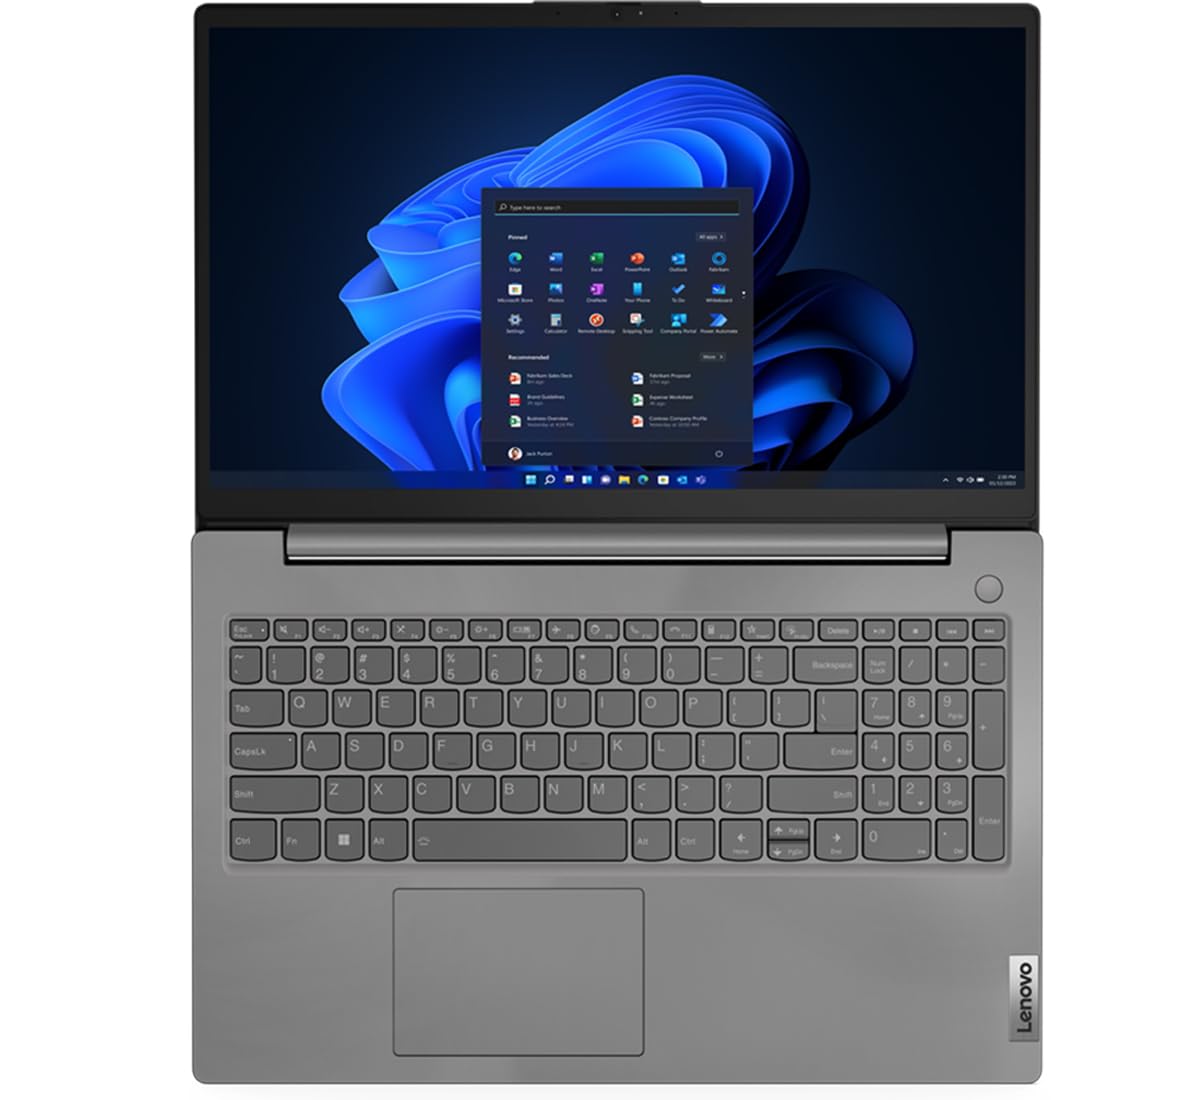 Lenovo V15 Business Laptop (15.6" FHD Anti-Glare, Intel 12th Gen 10-Core i7-1255U, 40GB RAM, 2TB PCIe SSD), Numeric Keypad, Type-C, Ethernet, HDMI, Wi-Fi 6, Webcam, Win 11 Pro, Iron Grey